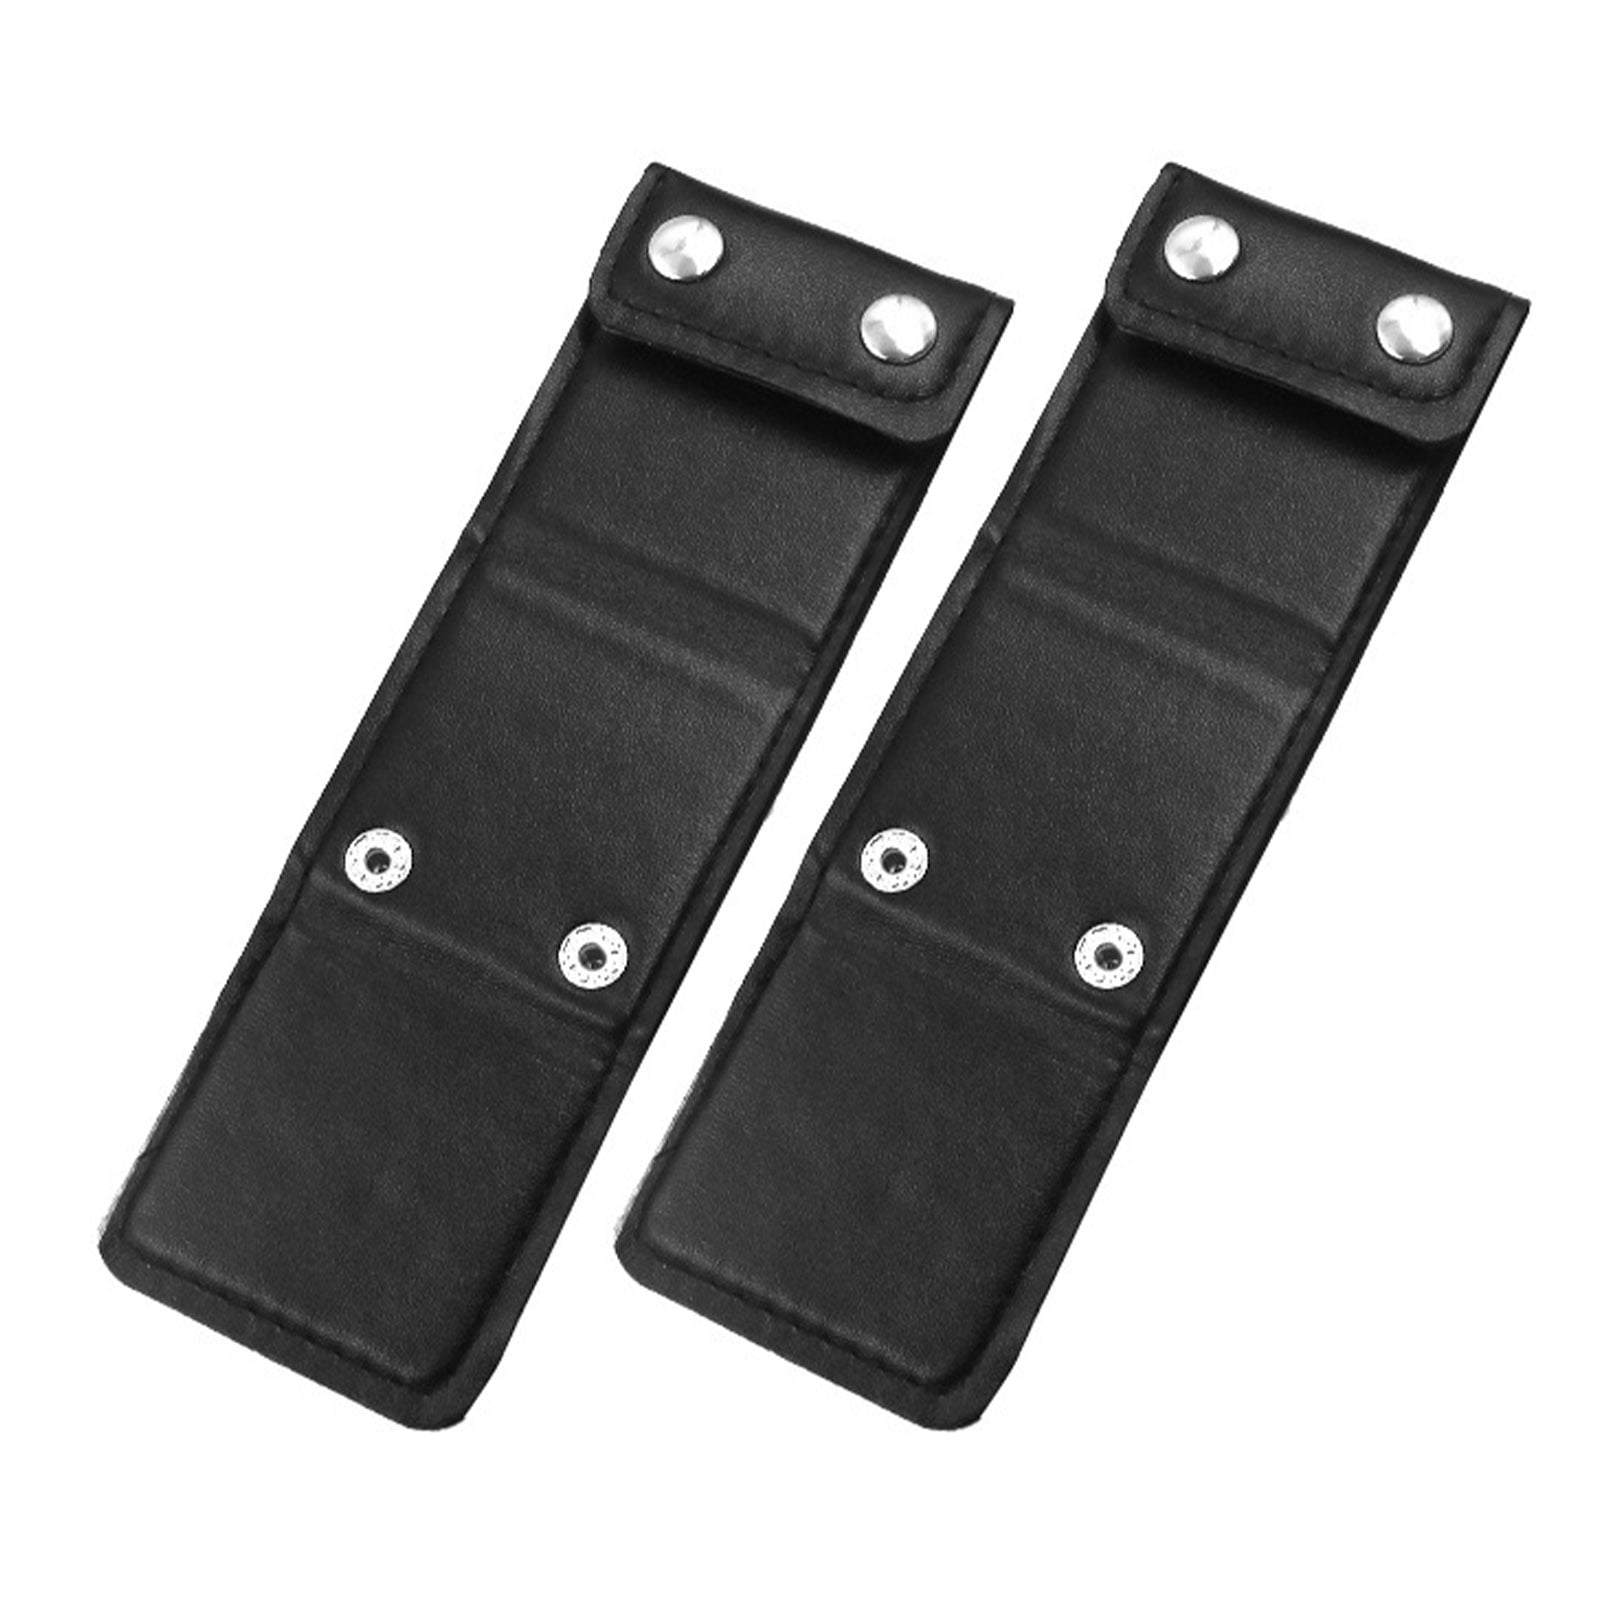 4 Pack PU Leather Seatbelt Cover Clips Universal Comfort Shoulder Neck Protector Strap Positioner Lock Clips for Adults Kids Pregnant Women Car Seat Belt Adjuster 